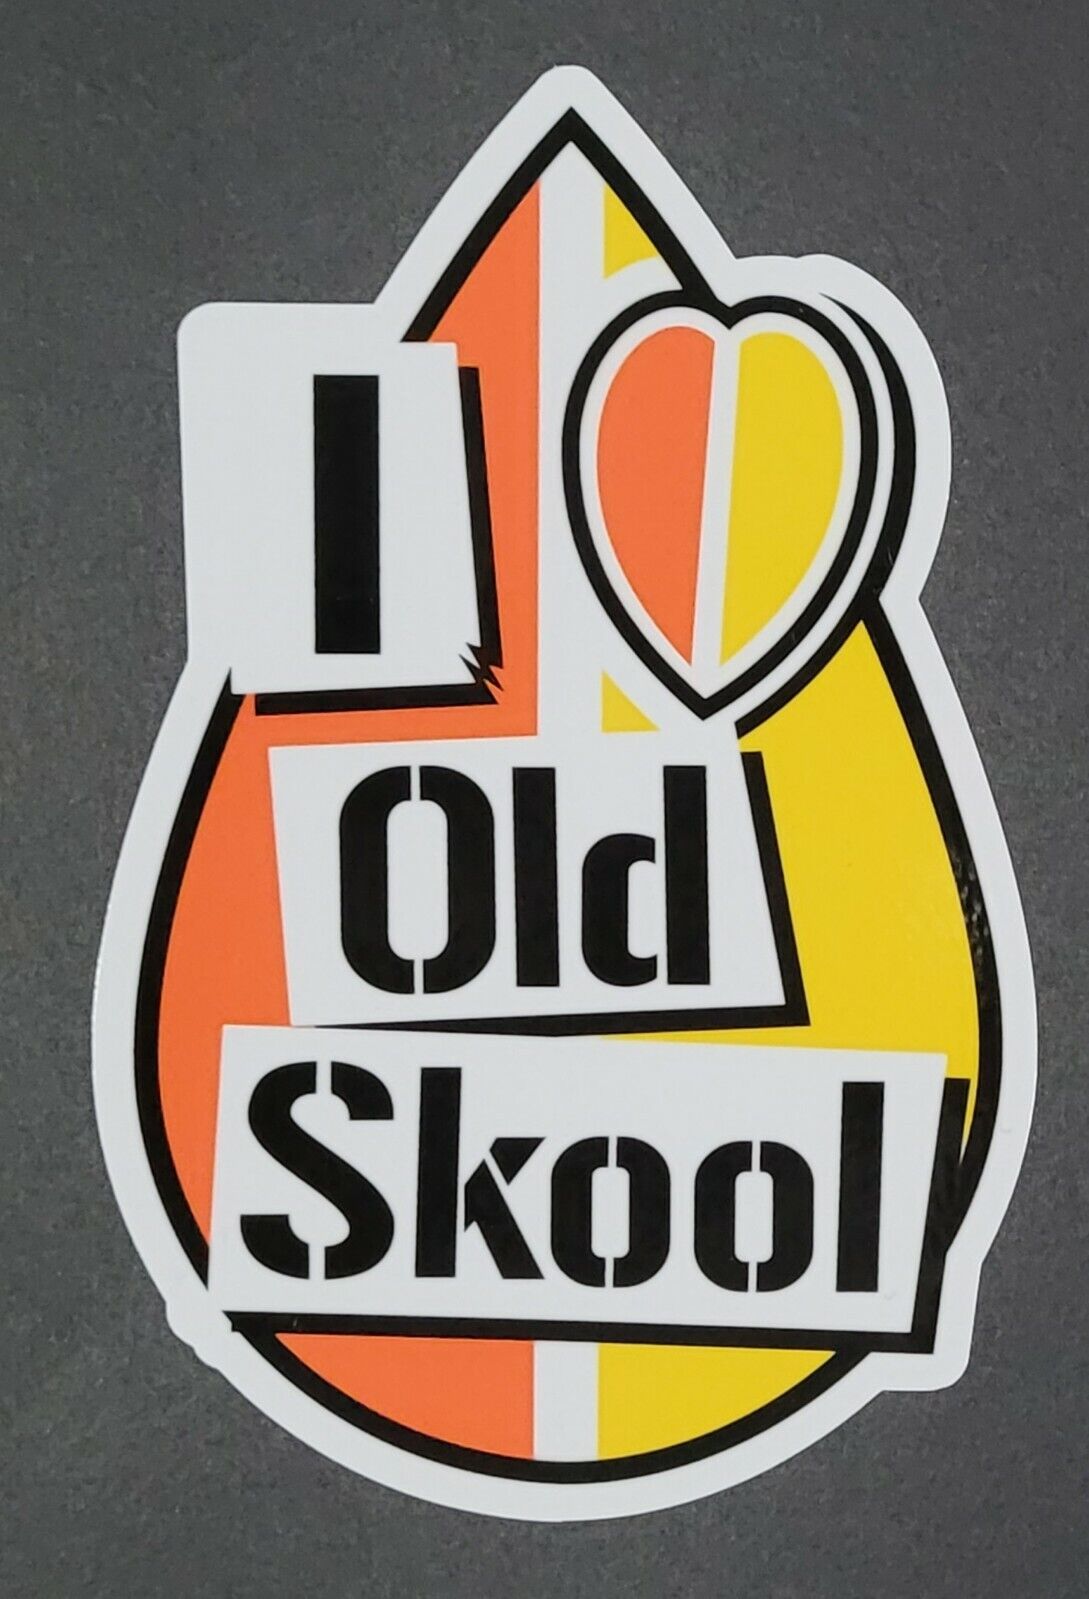 I Love Old Skool 10cm x 15.5cm Vinyl Sticker / decal Windows Automotive Marine.